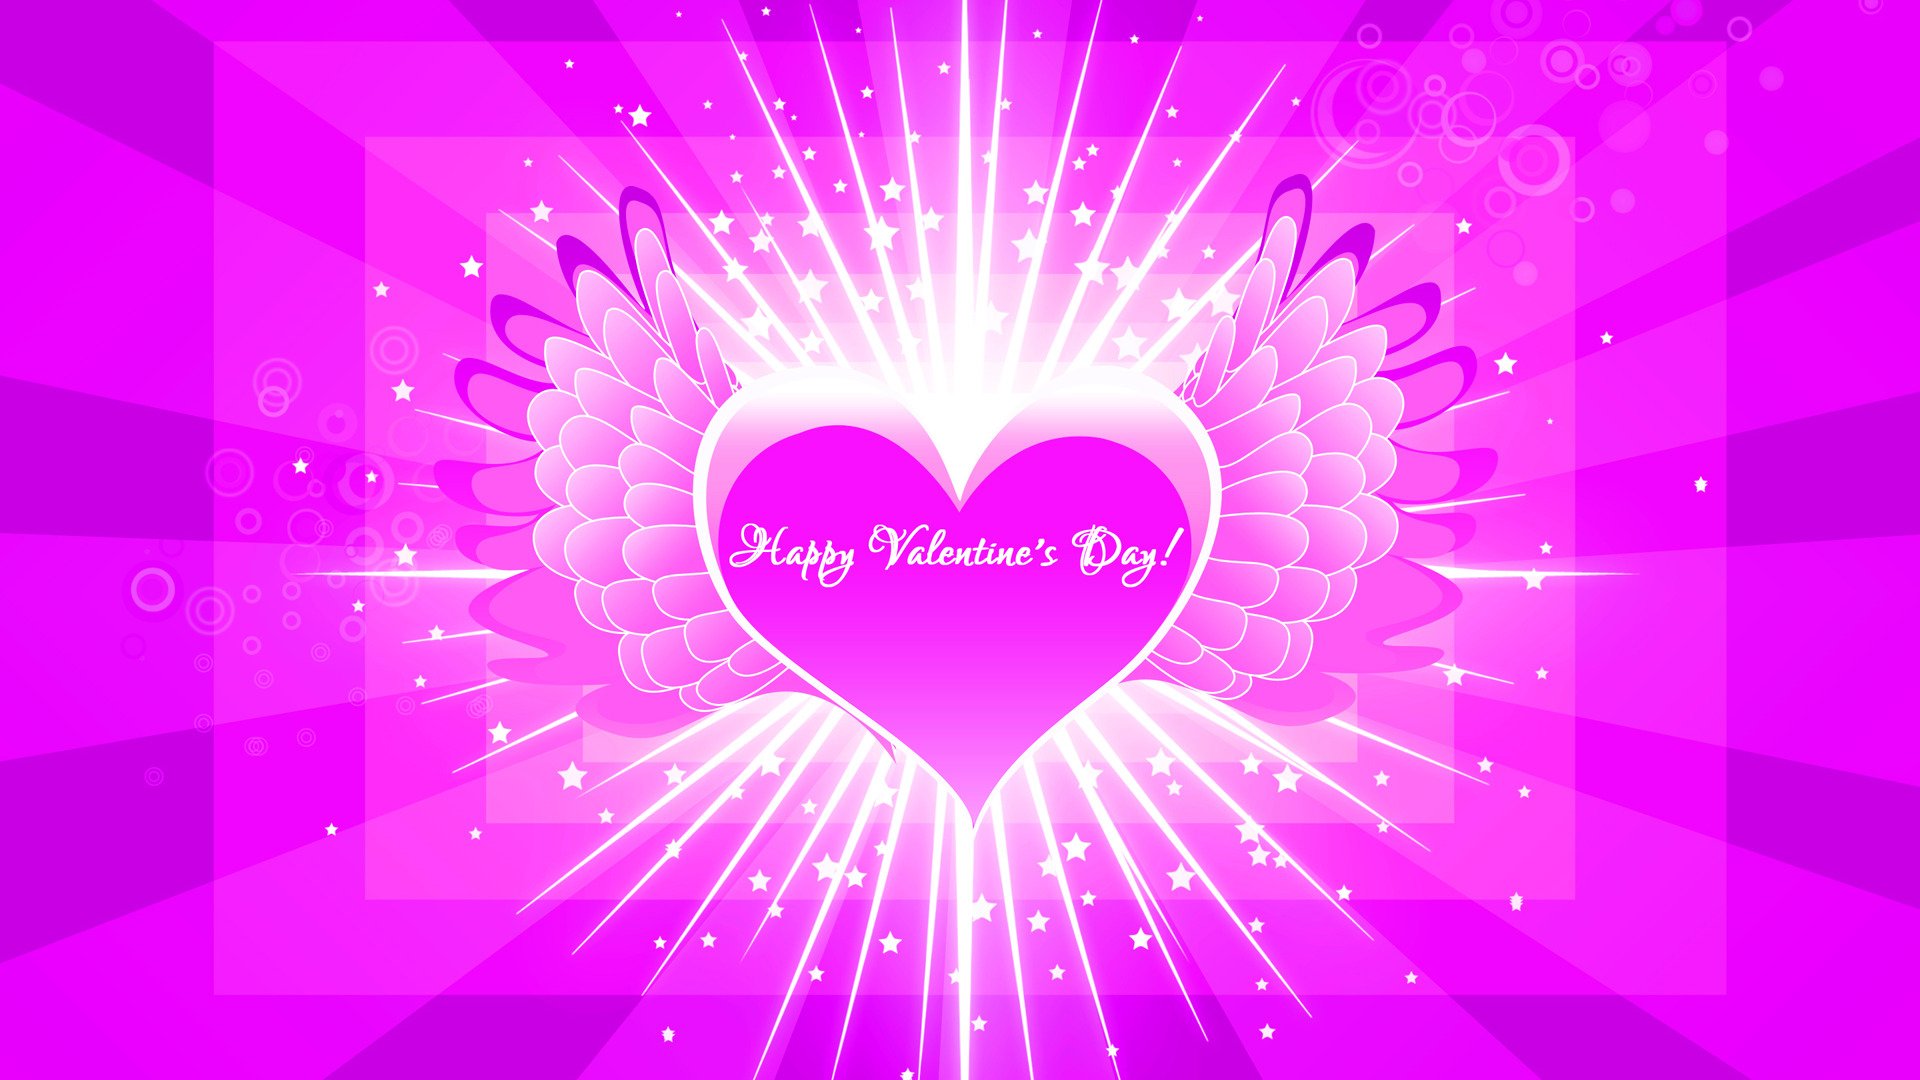 Best HD Valentine S Day Image For Mobile Pc Desktop Laptop